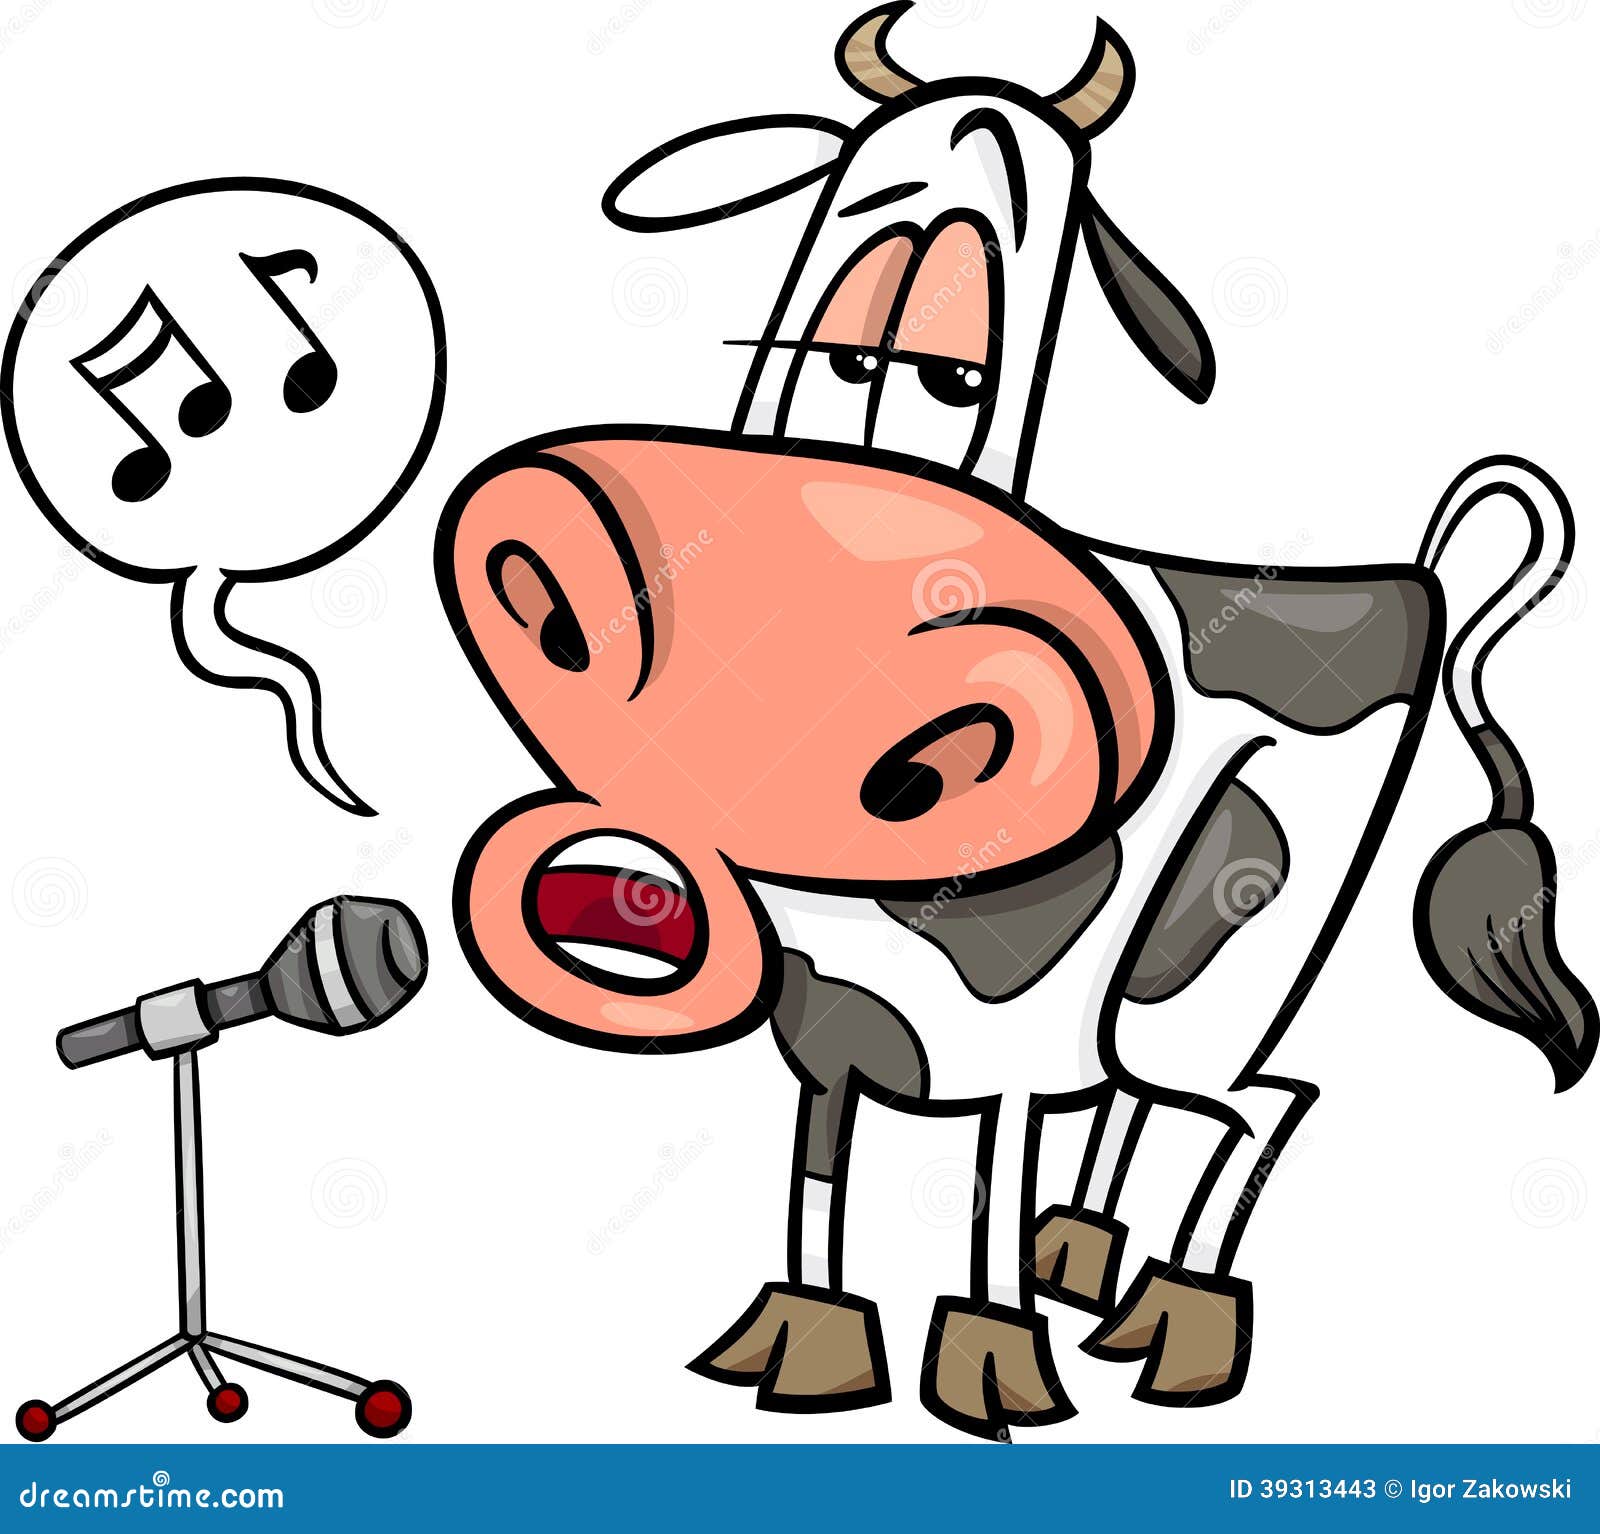 funny cow clip art - photo #30